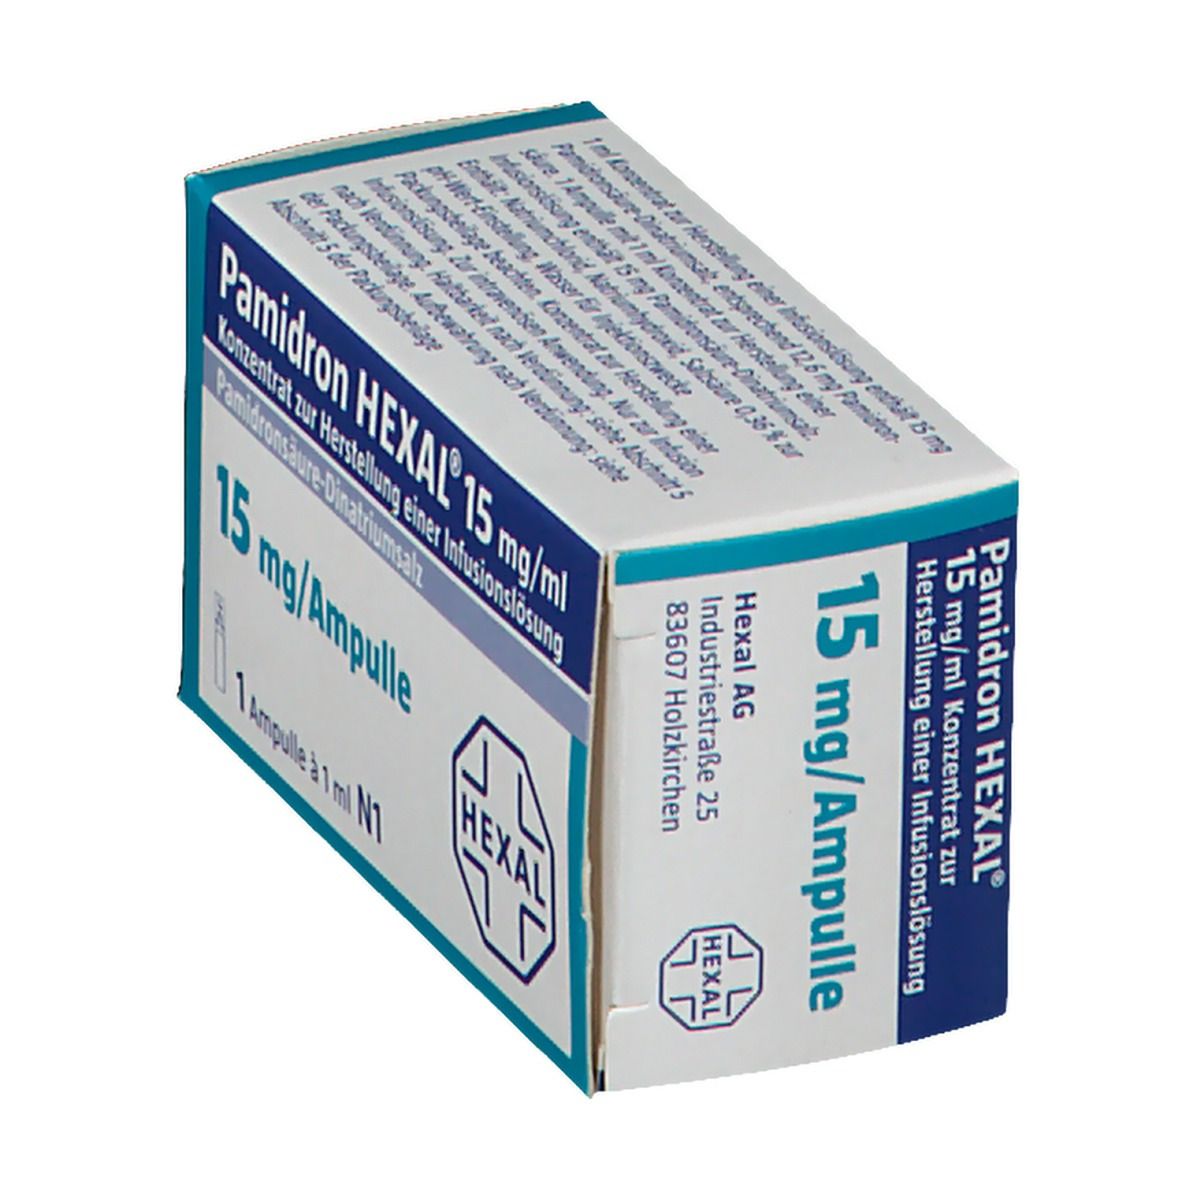 Pamidron HEXAL® 15 mg/ml